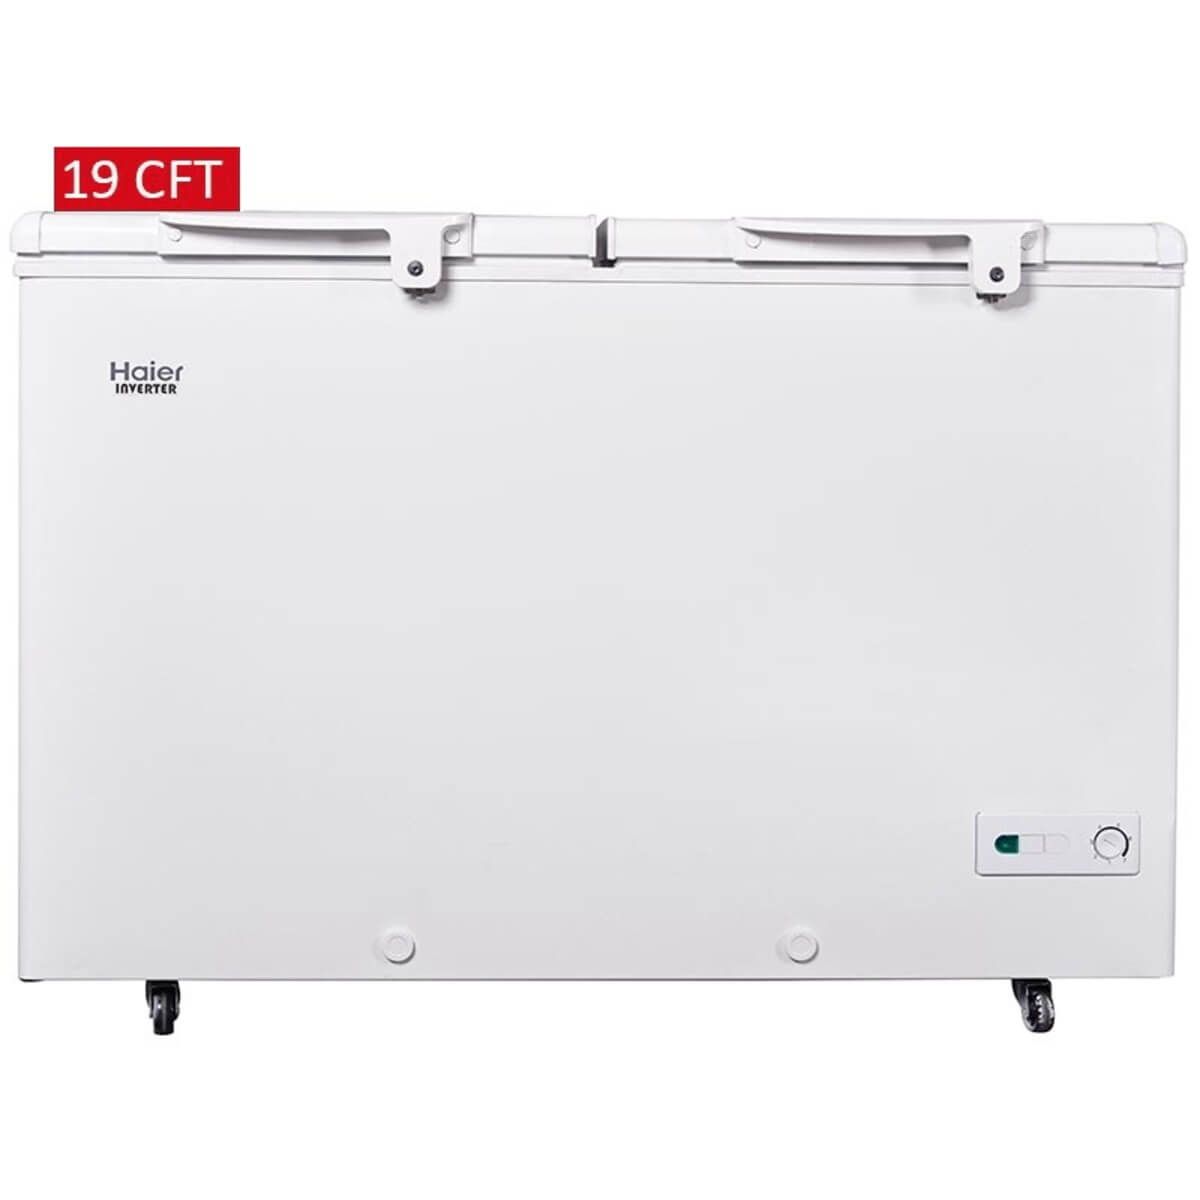 Haier Full Size 19 CFT Inverter Chest Freezer HDF-545INV